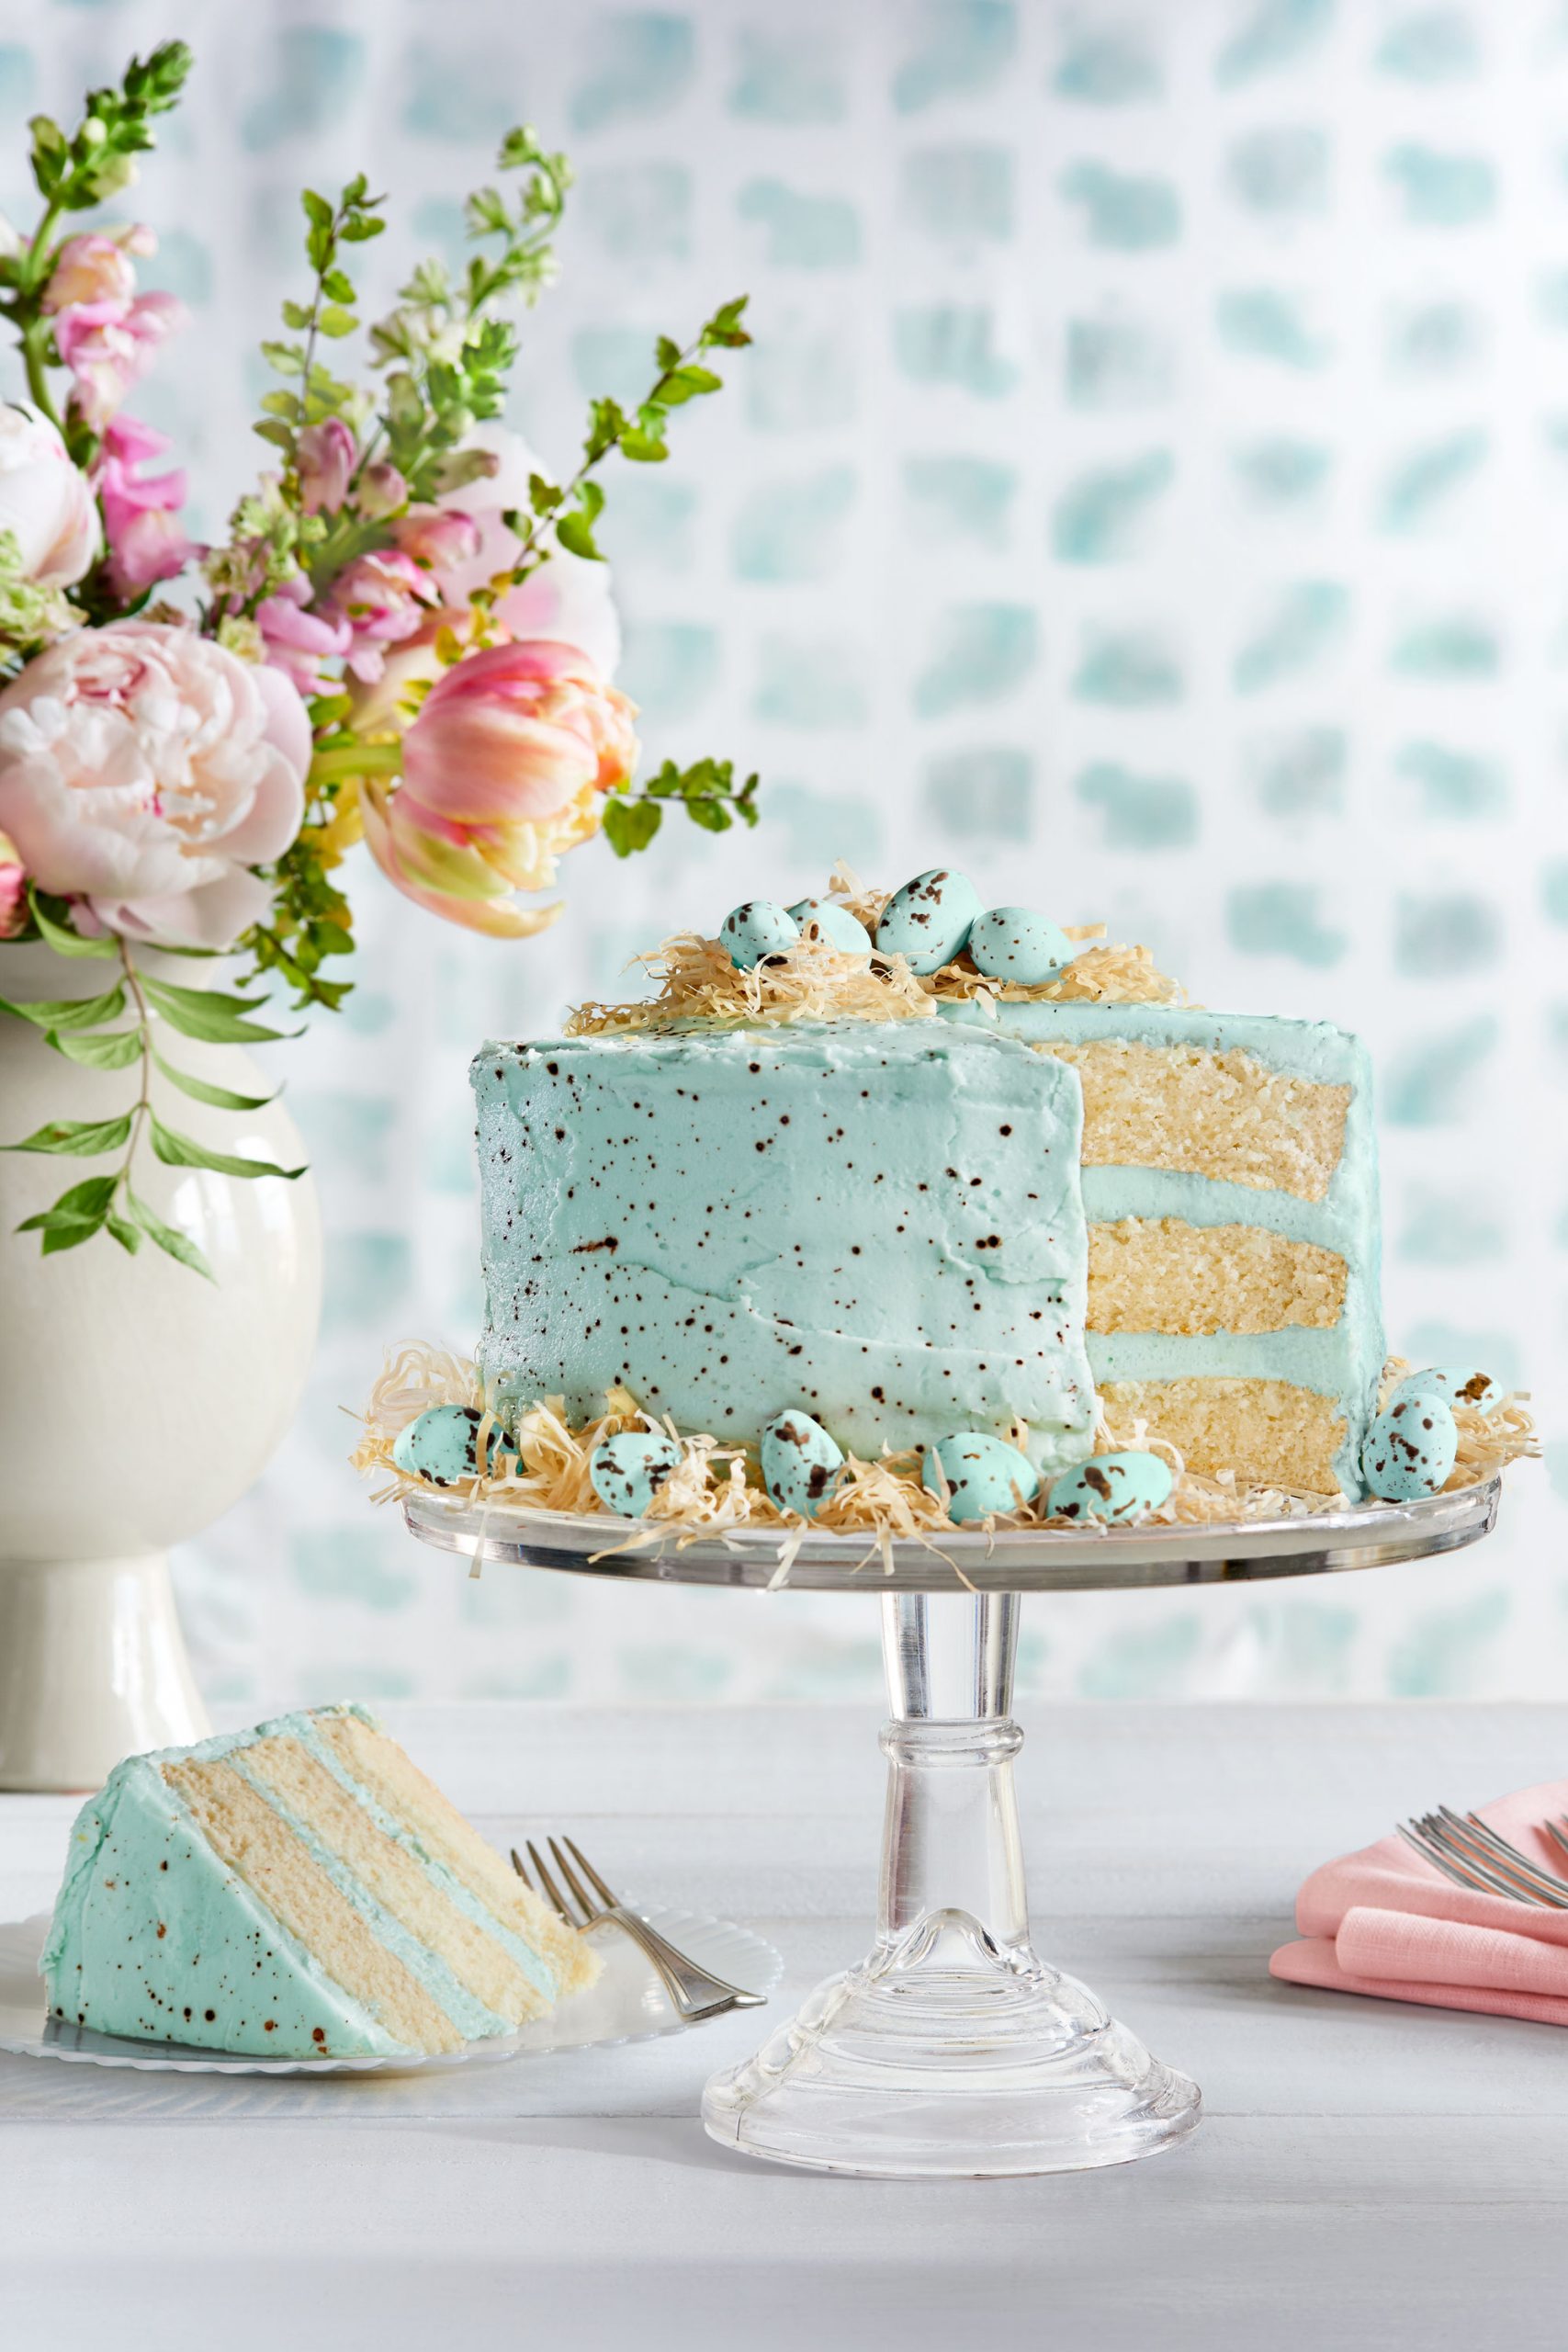 15 Beautiful Cake Decorating Ideas